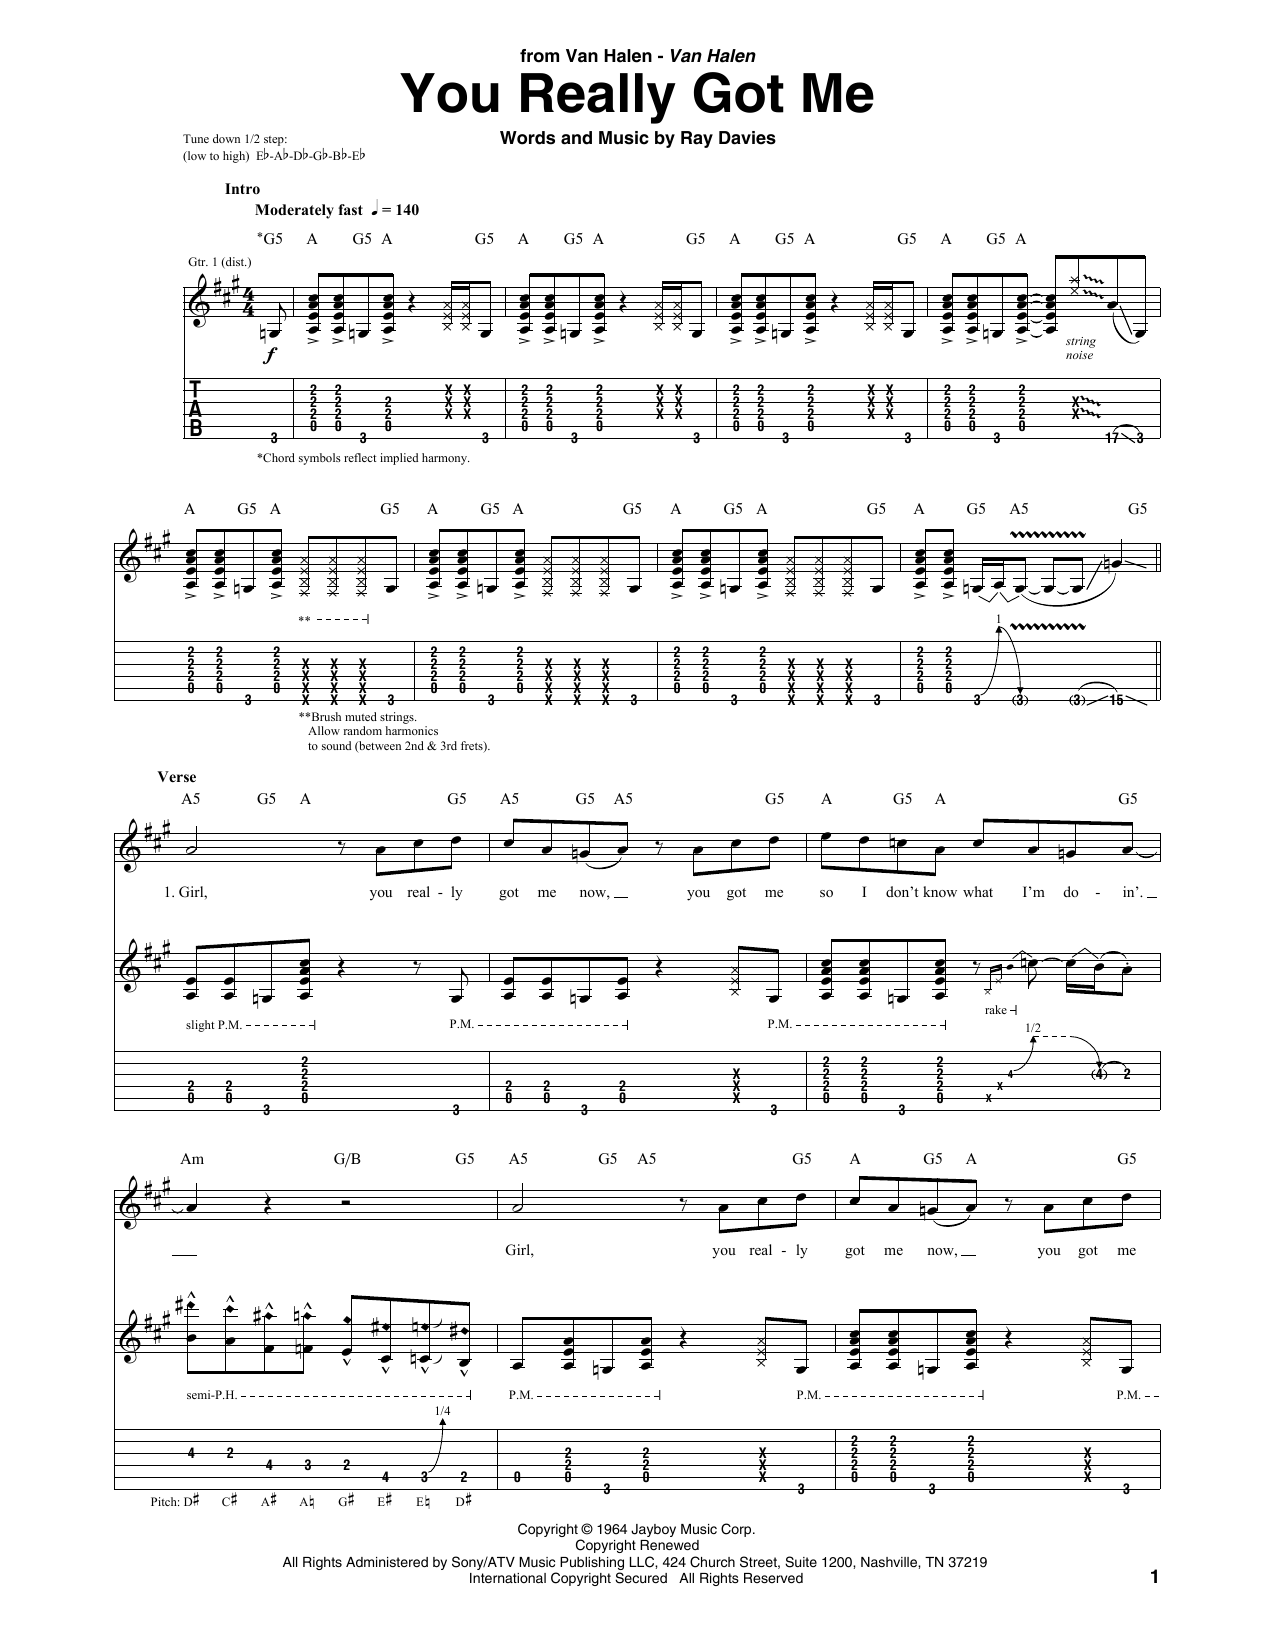 Van Halen You Really Got Me Sheet Music Notes & Chords for Drums Transcription - Download or Print PDF